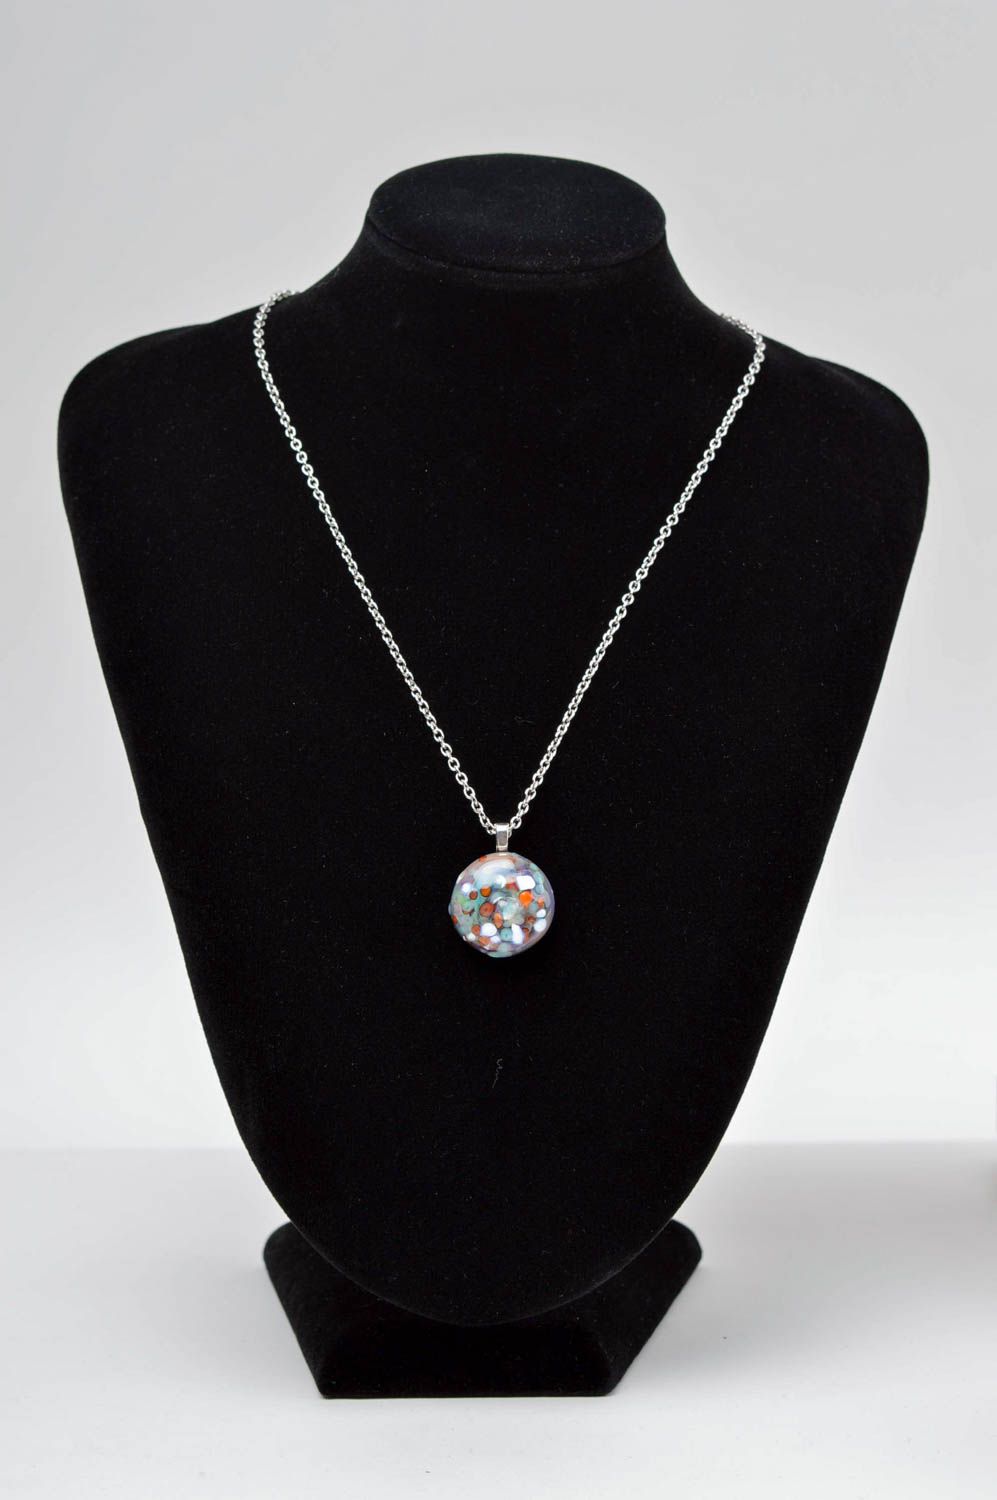 Stylish handmade glass pendant glass art unusual neck accessories for girls photo 5